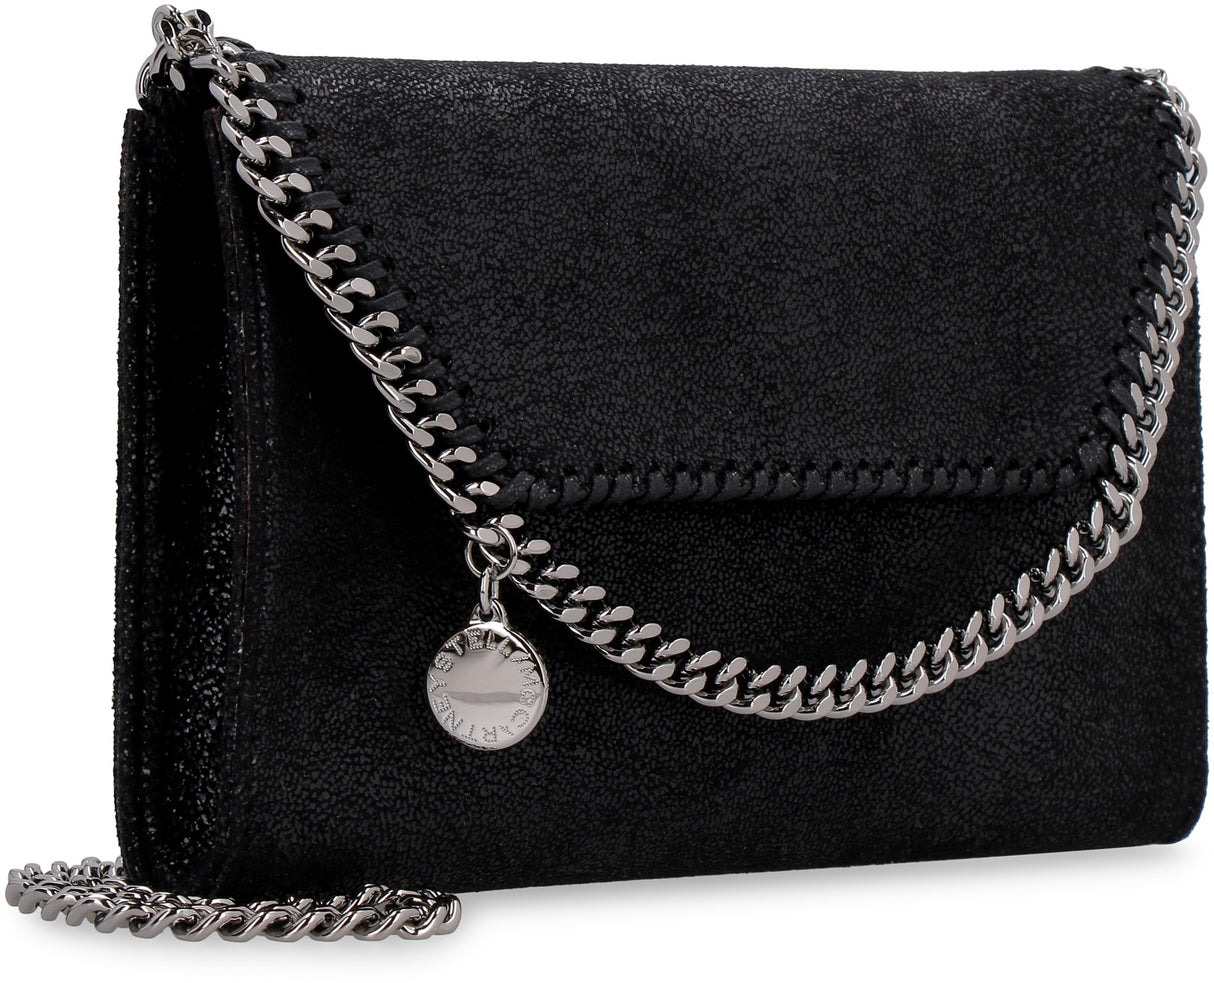 STELLA MCCARTNEY Mini Black Faux Leather Crossbody Bag with Silver Chain Detail